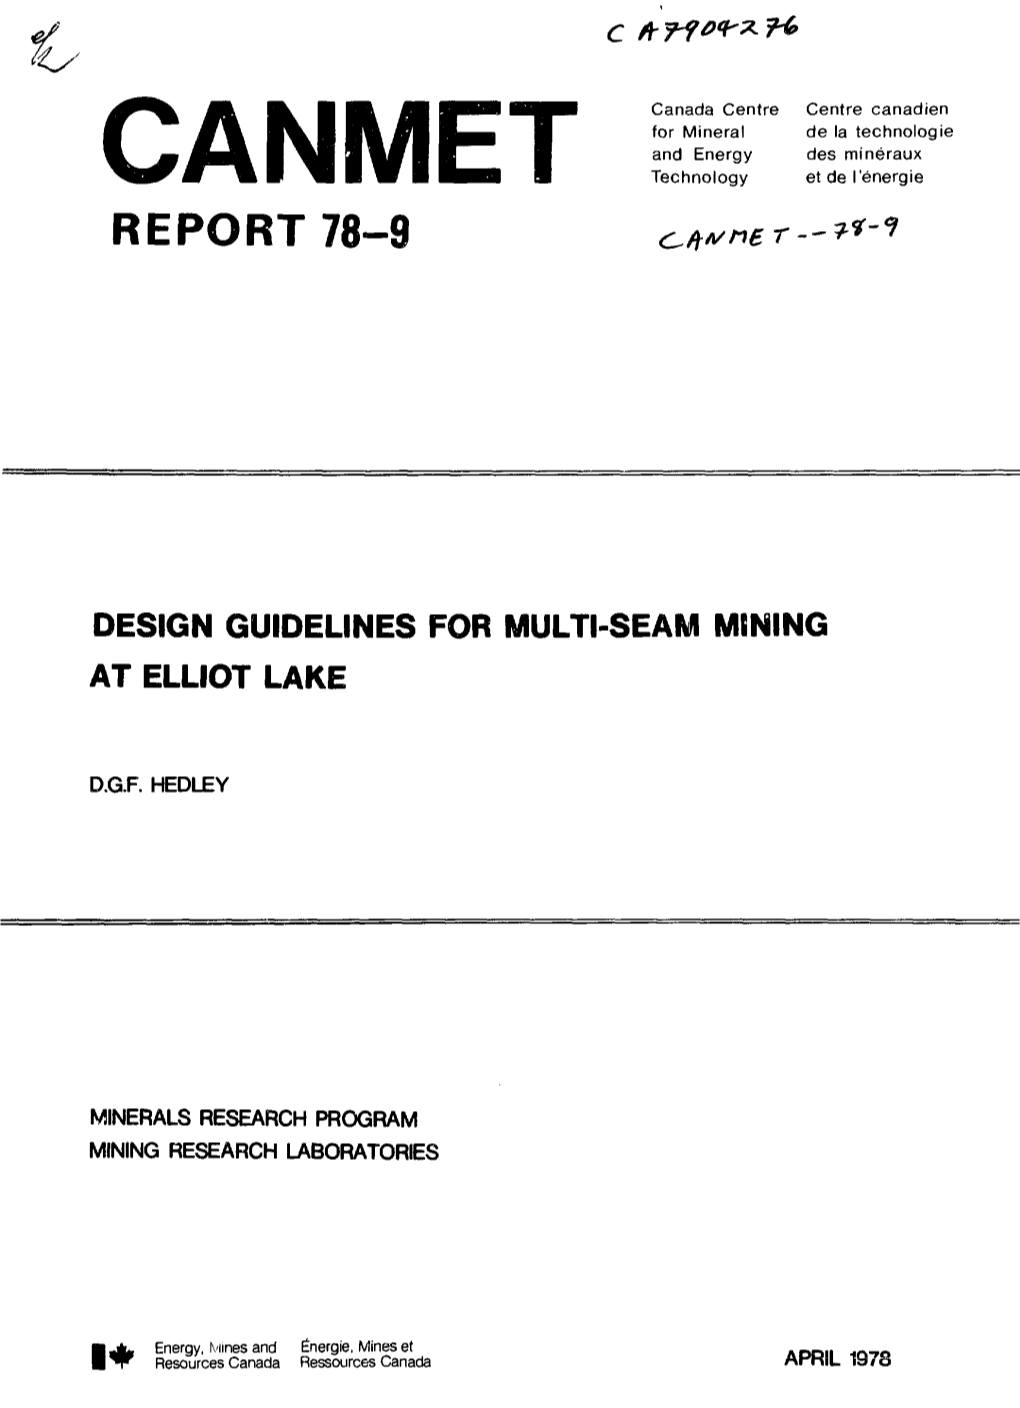 Design Guidelines for Multi-Seam Mining at Elliot Lake